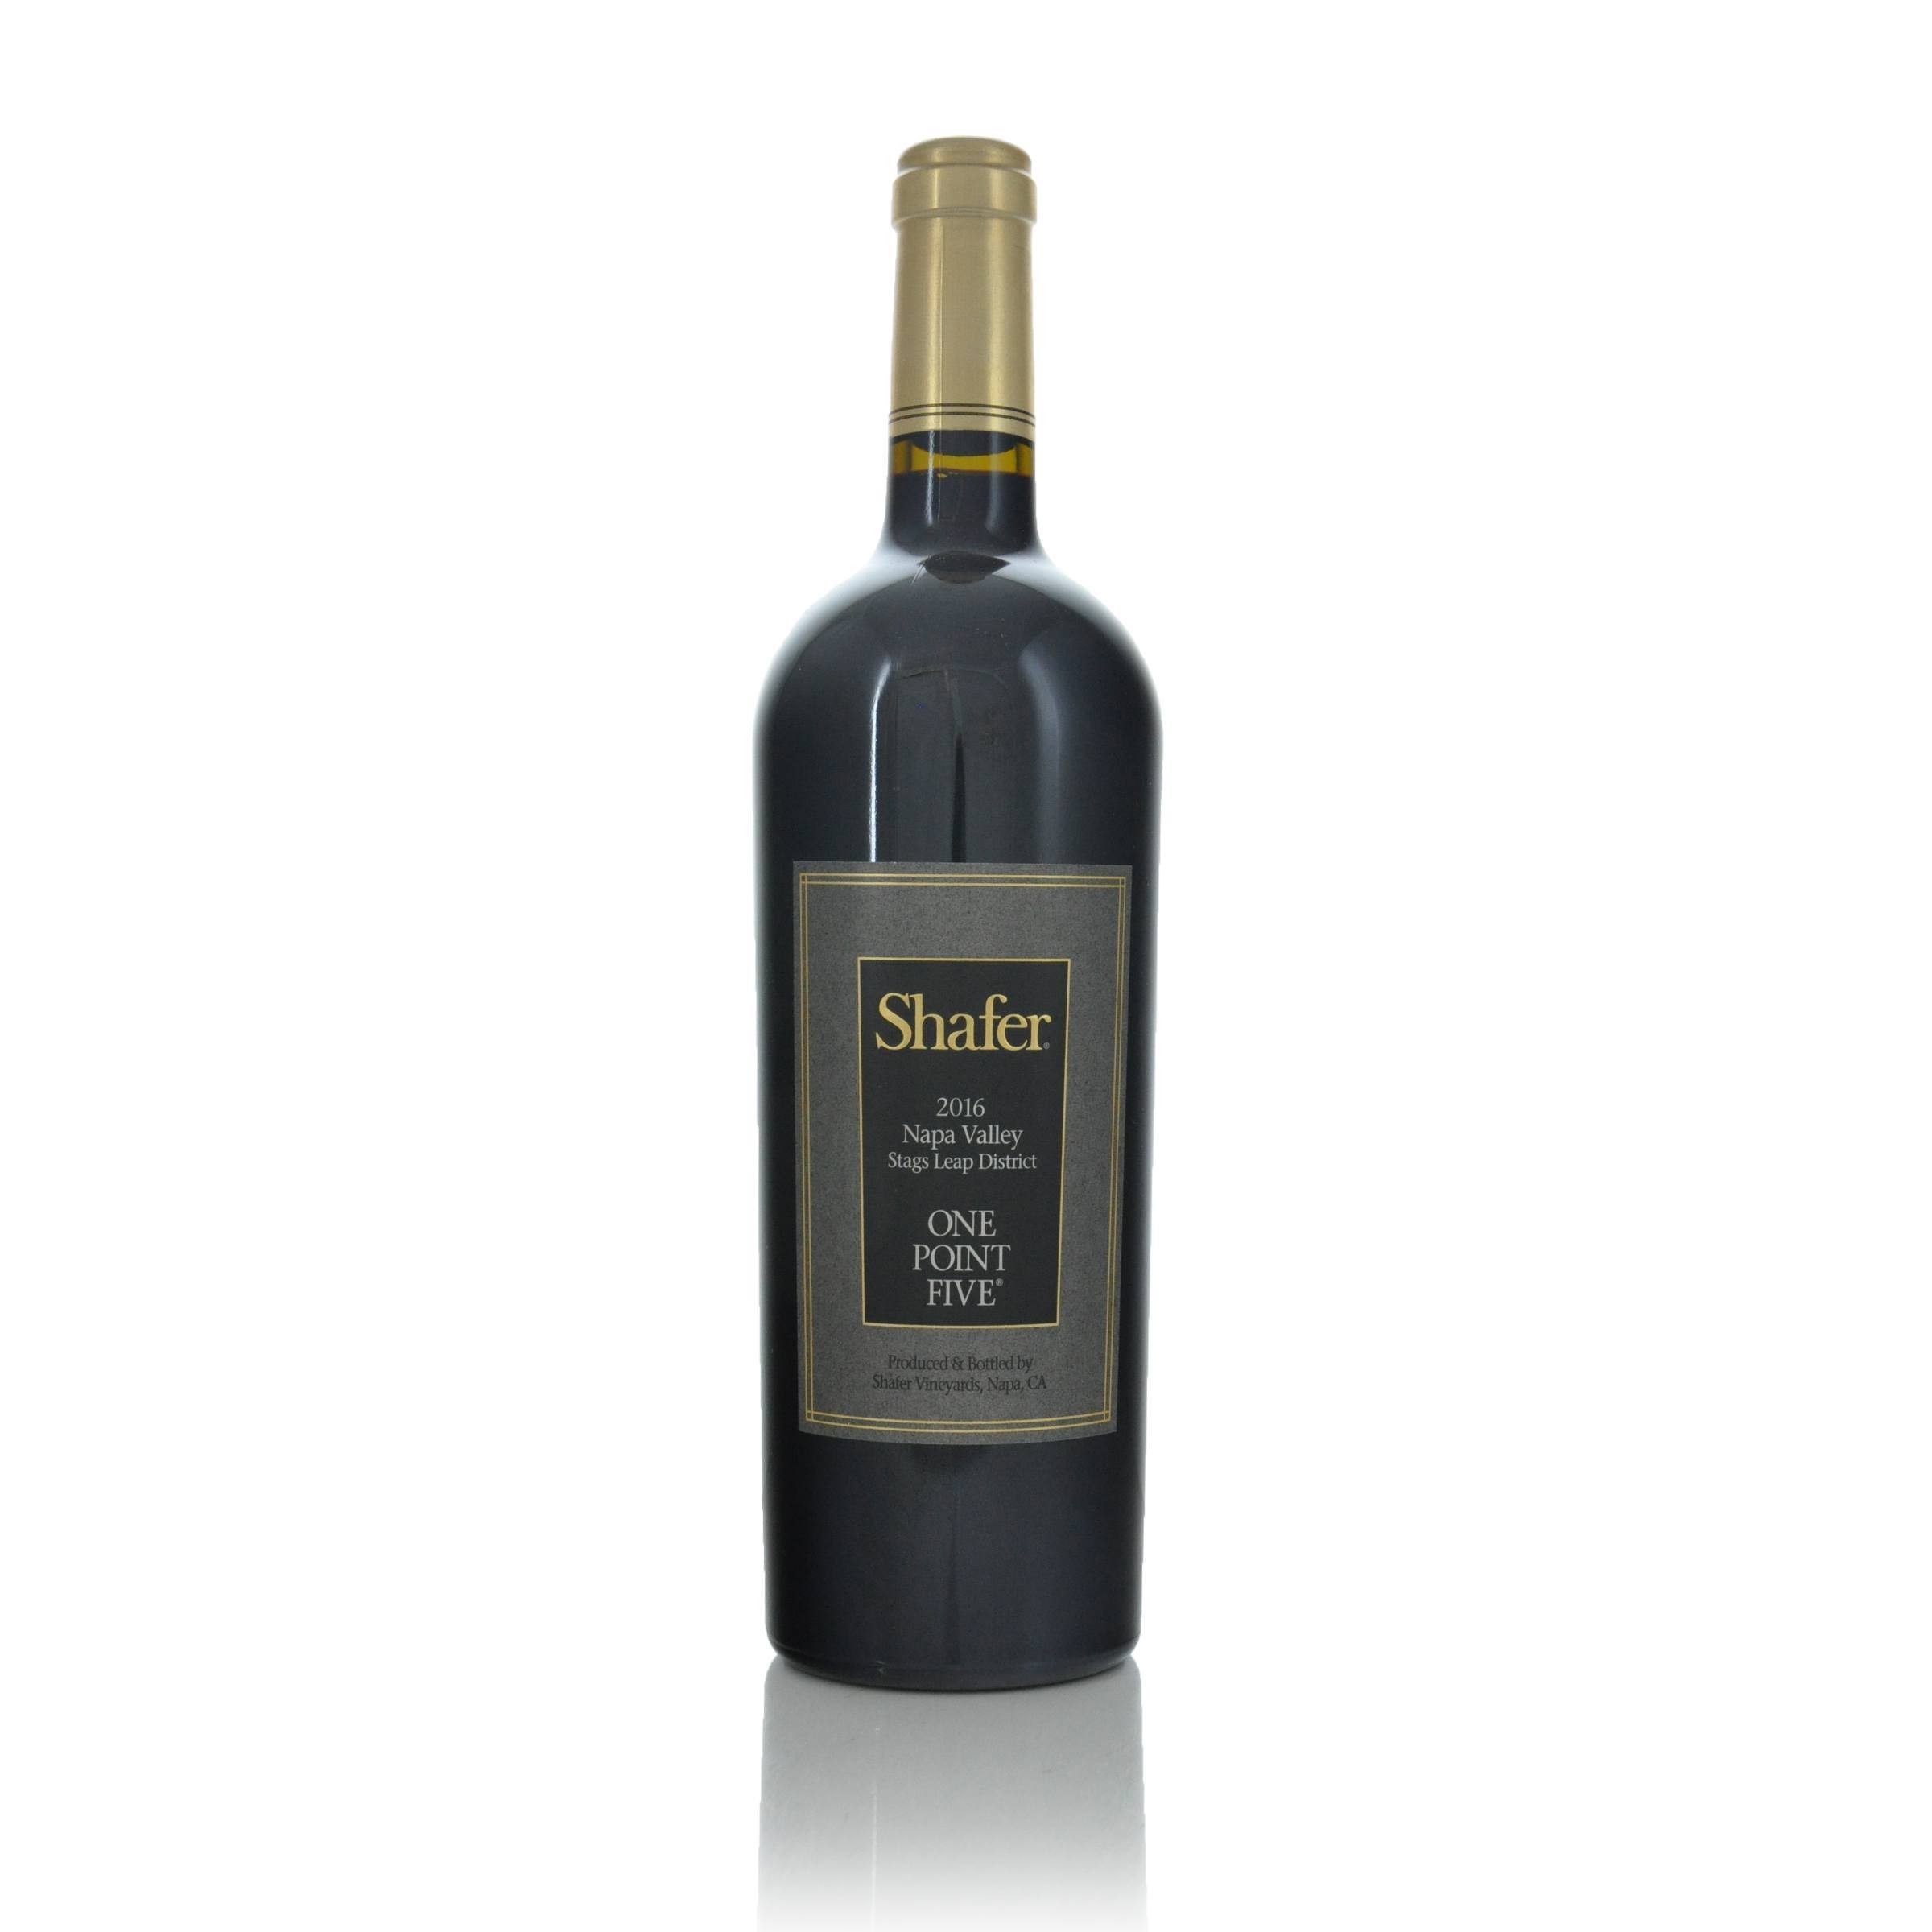 Shafer Cabernet Sauvignon Wine - 750ml